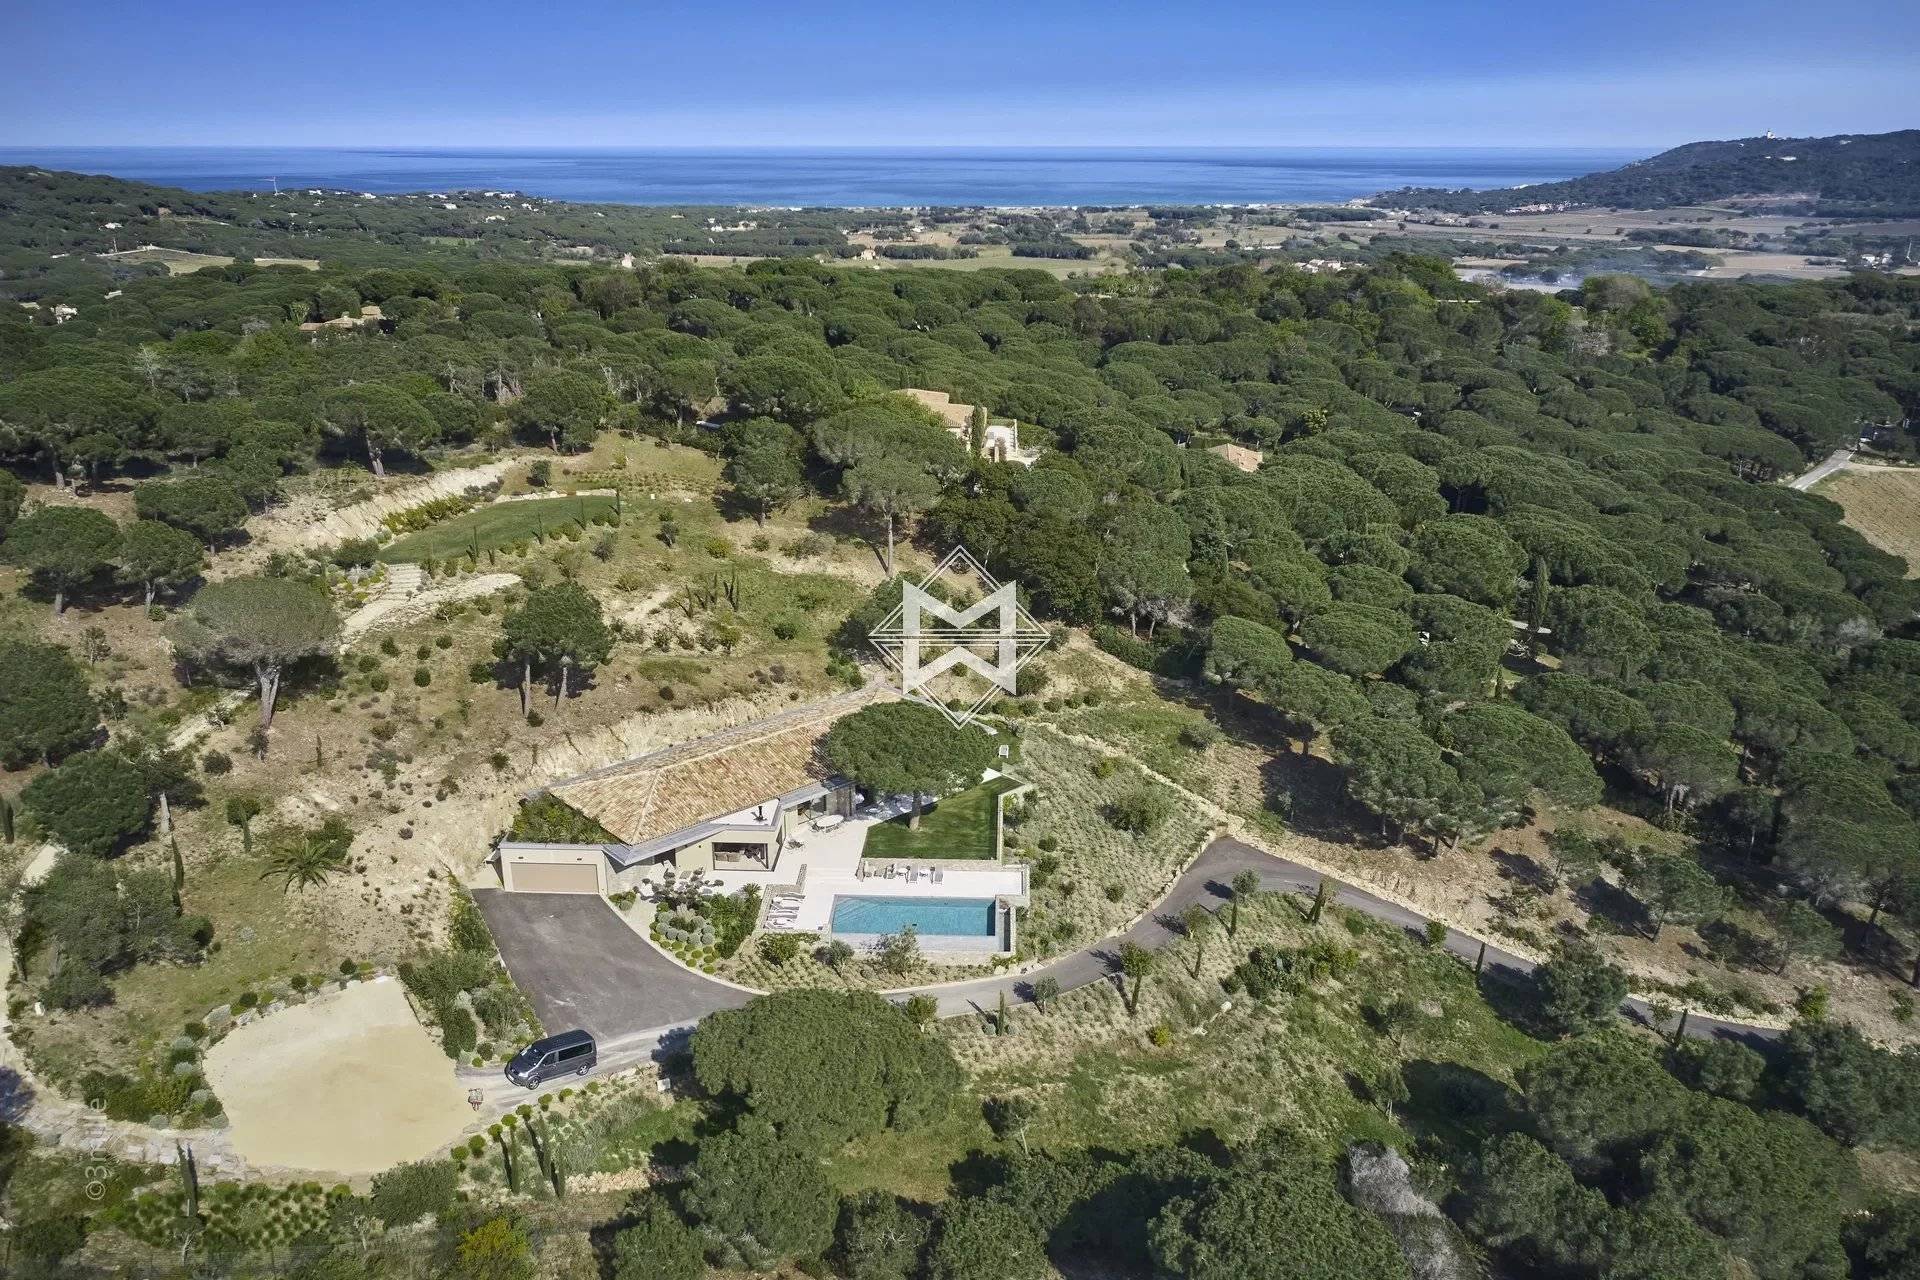 New architect's villa - Large landscaped park